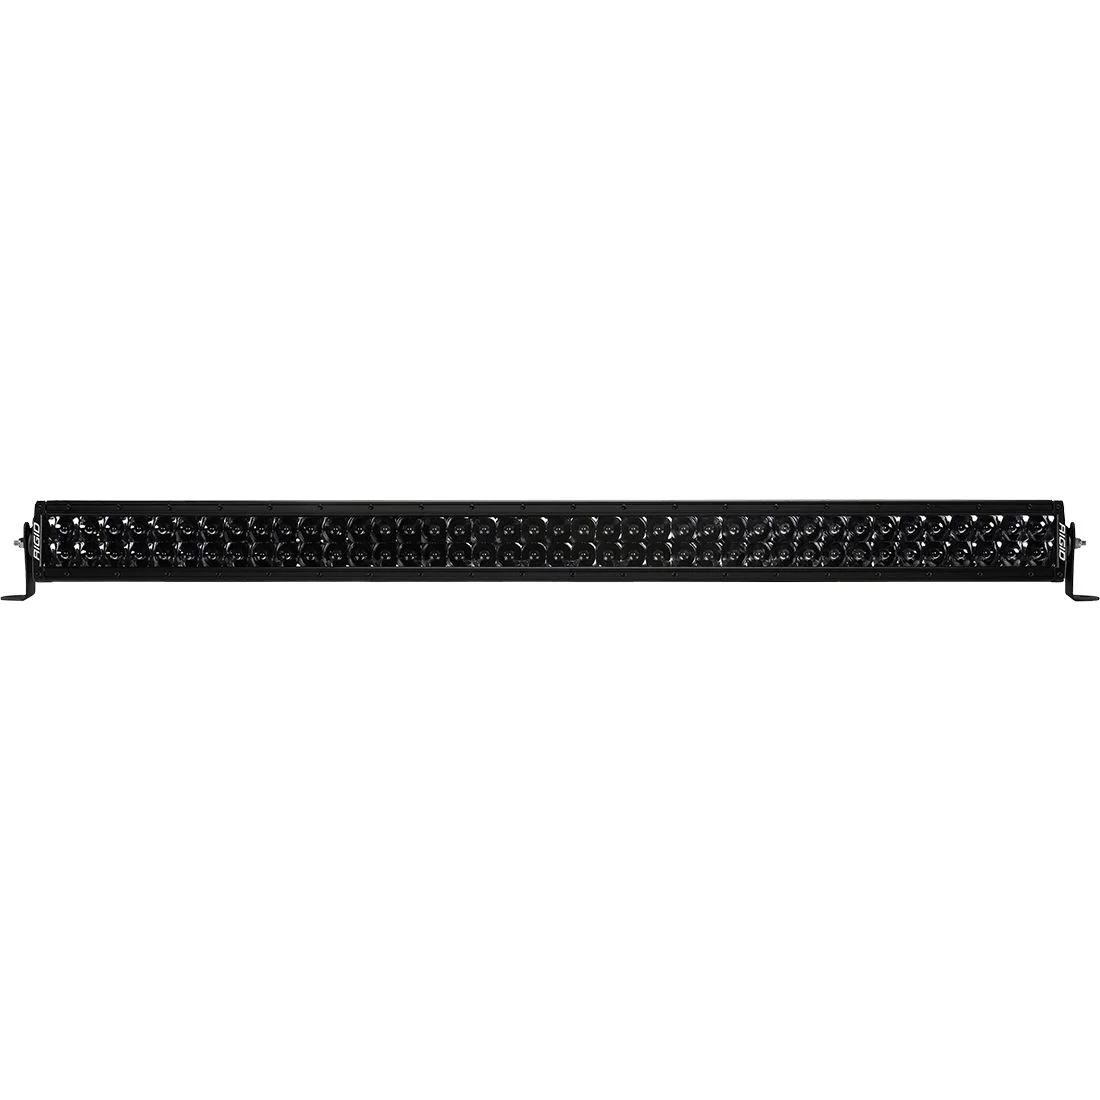 MIDNIGHT EDITION Rigid E-Series Pro Light Bars (Sizes 4''-50'')